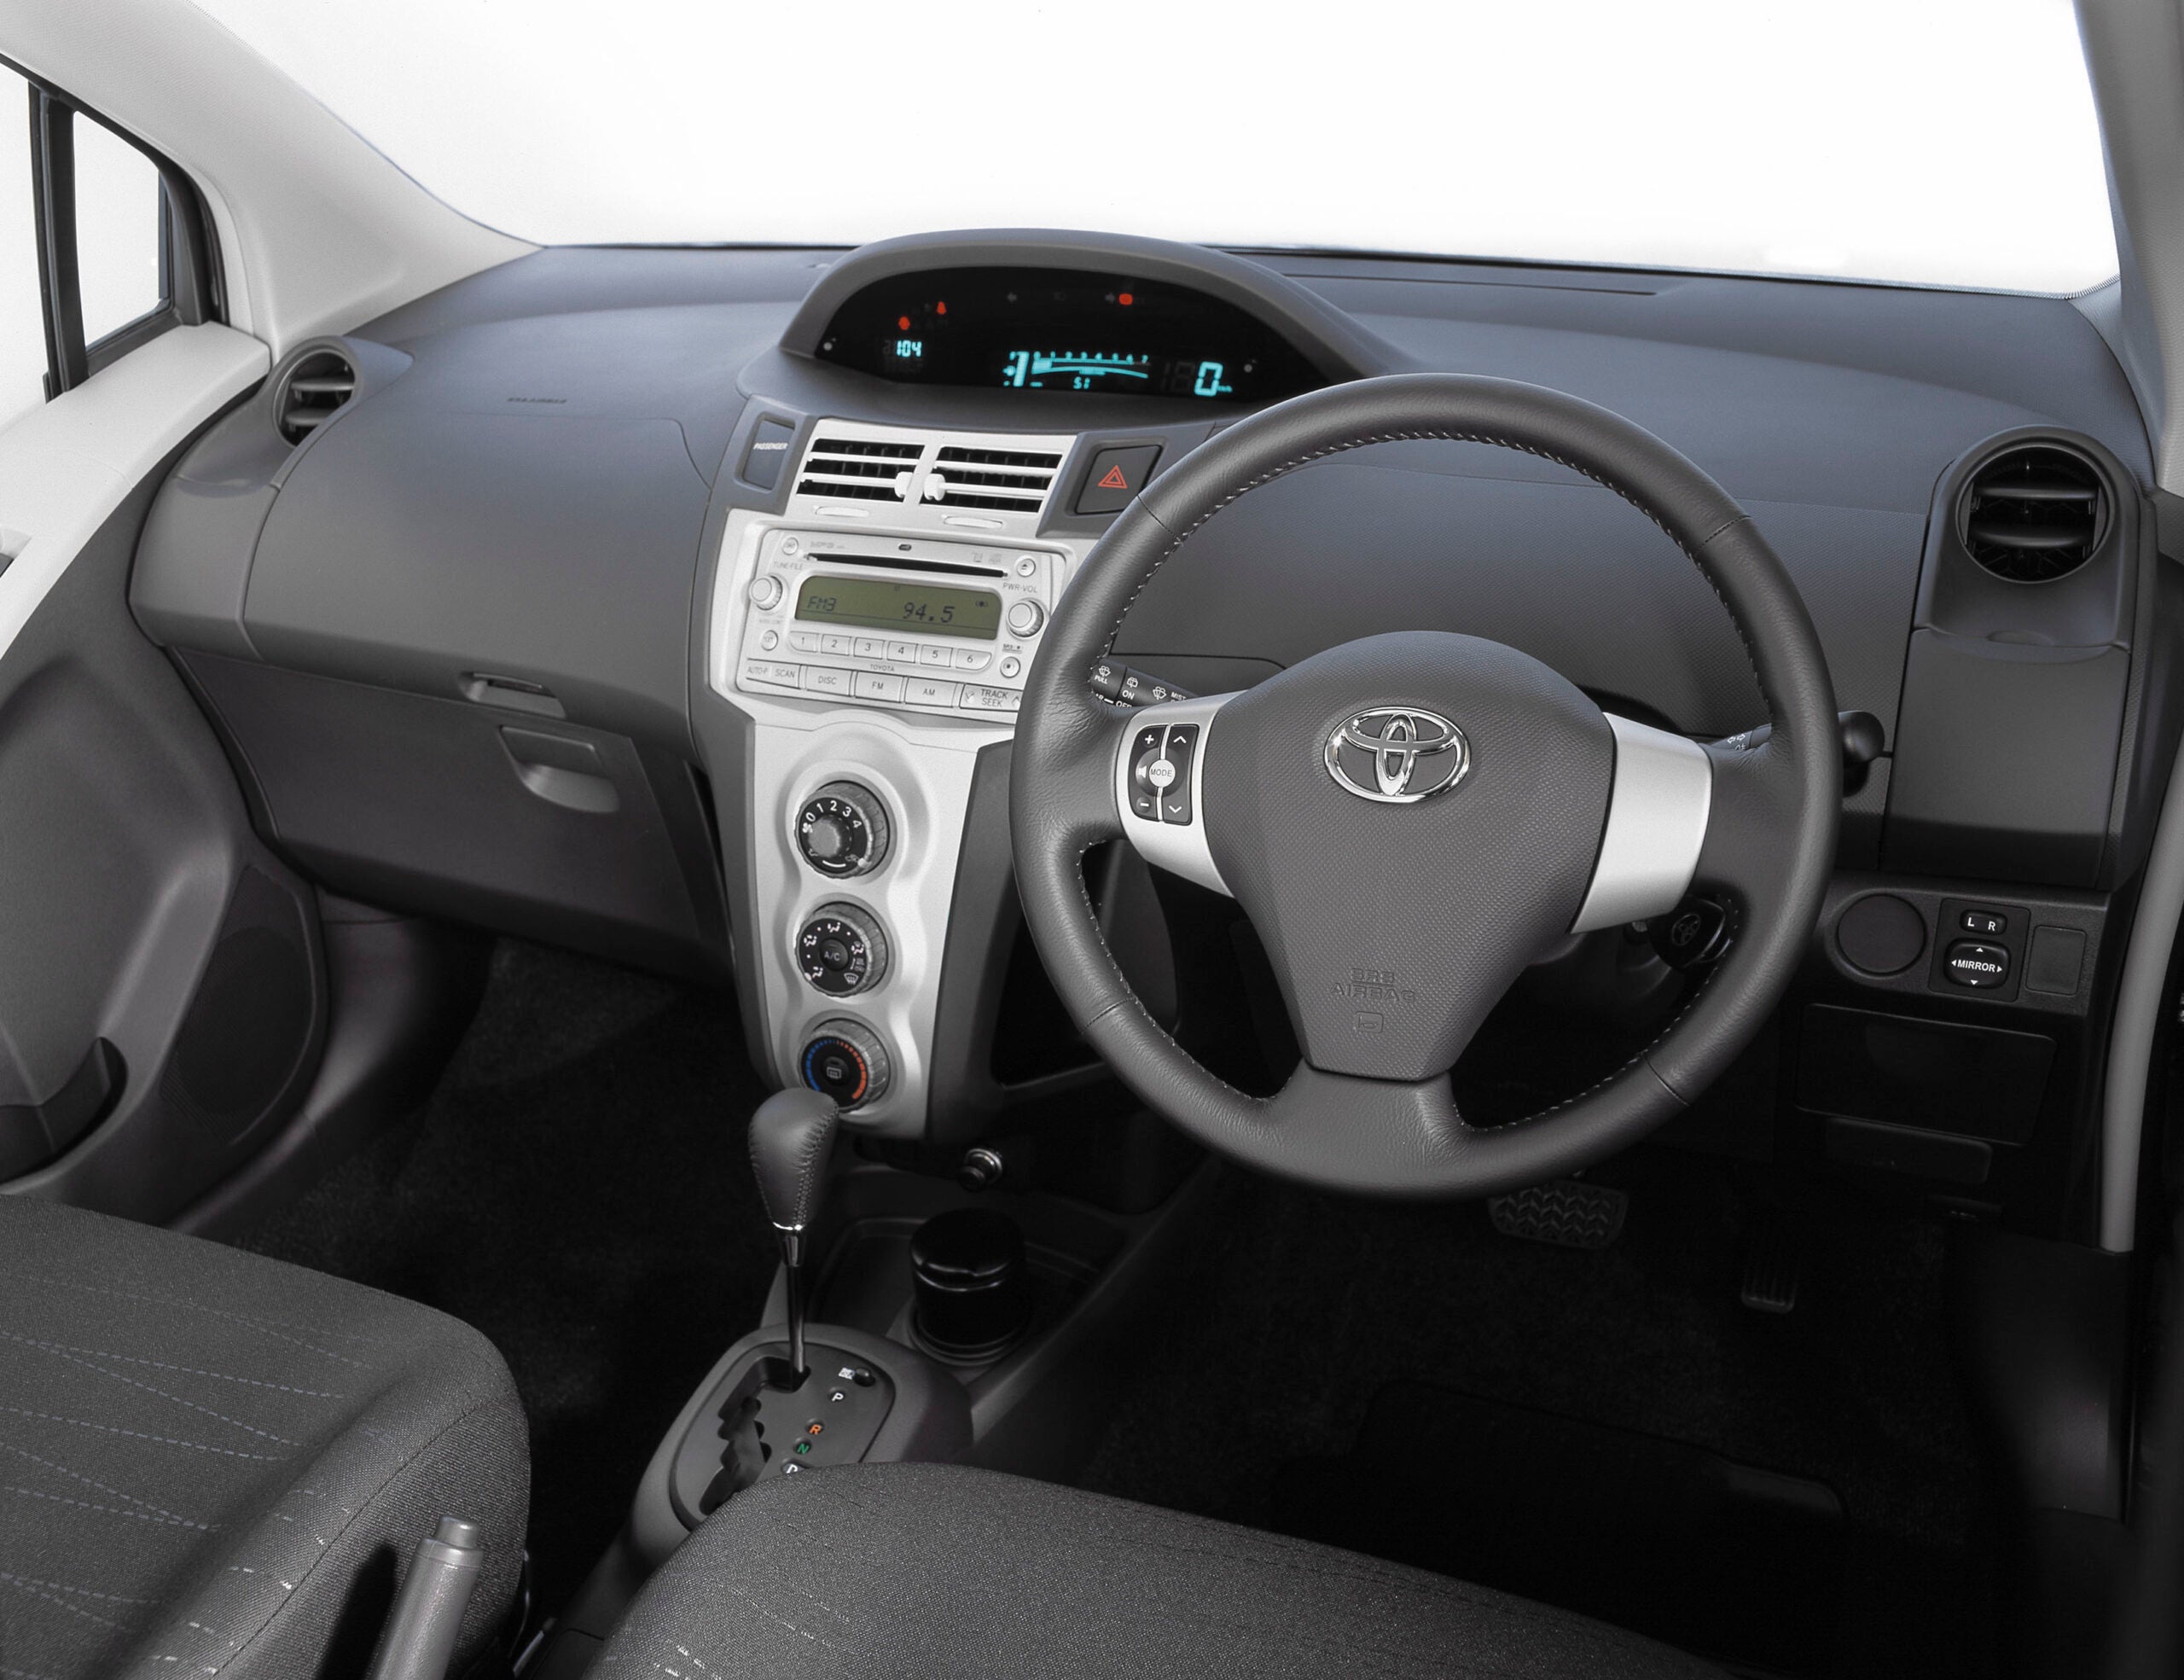 2005 Toyota Yaris YRX interior.